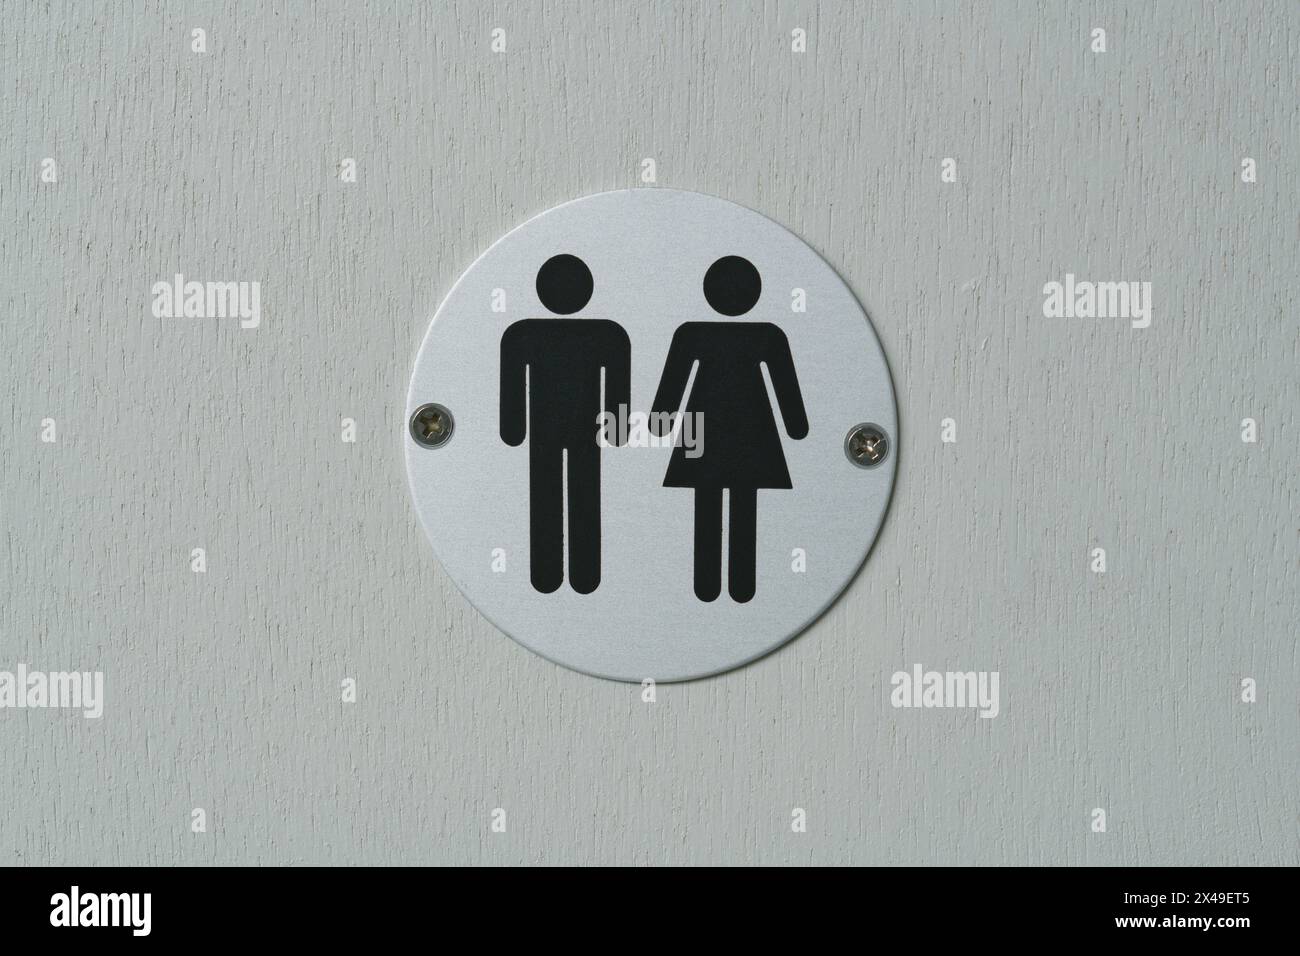 Toilet sign on a door. A brushed aluminium lavatory symbols screwed to a door. Both sexes. Mixed. Stock Photo